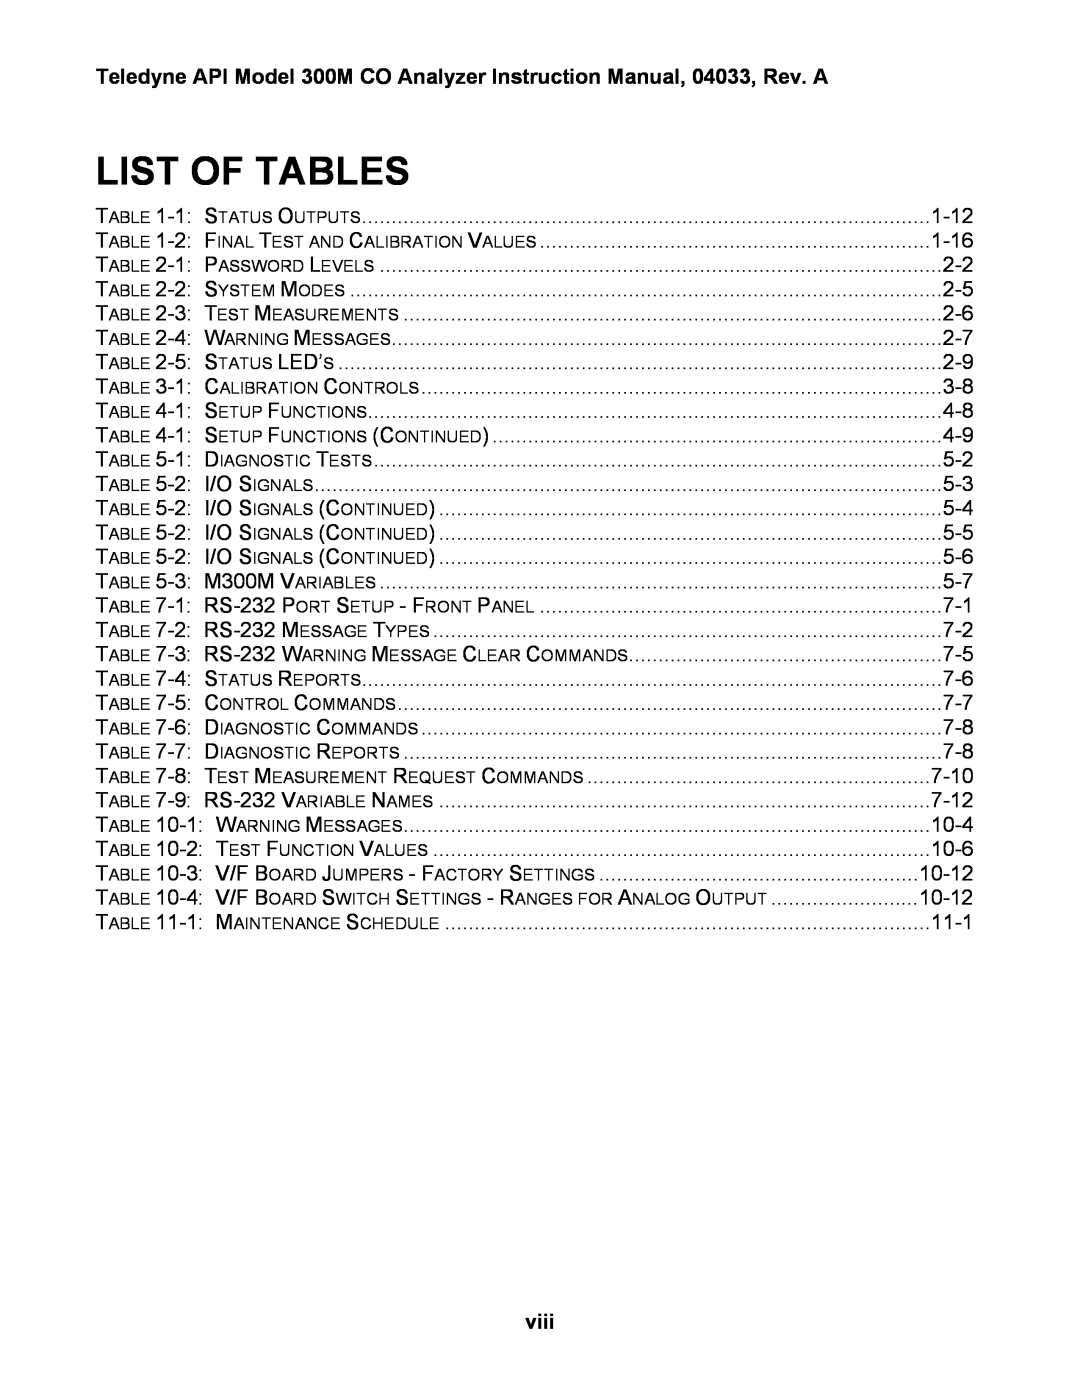 Teledyne 300M instruction manual List Of Tables, viii 